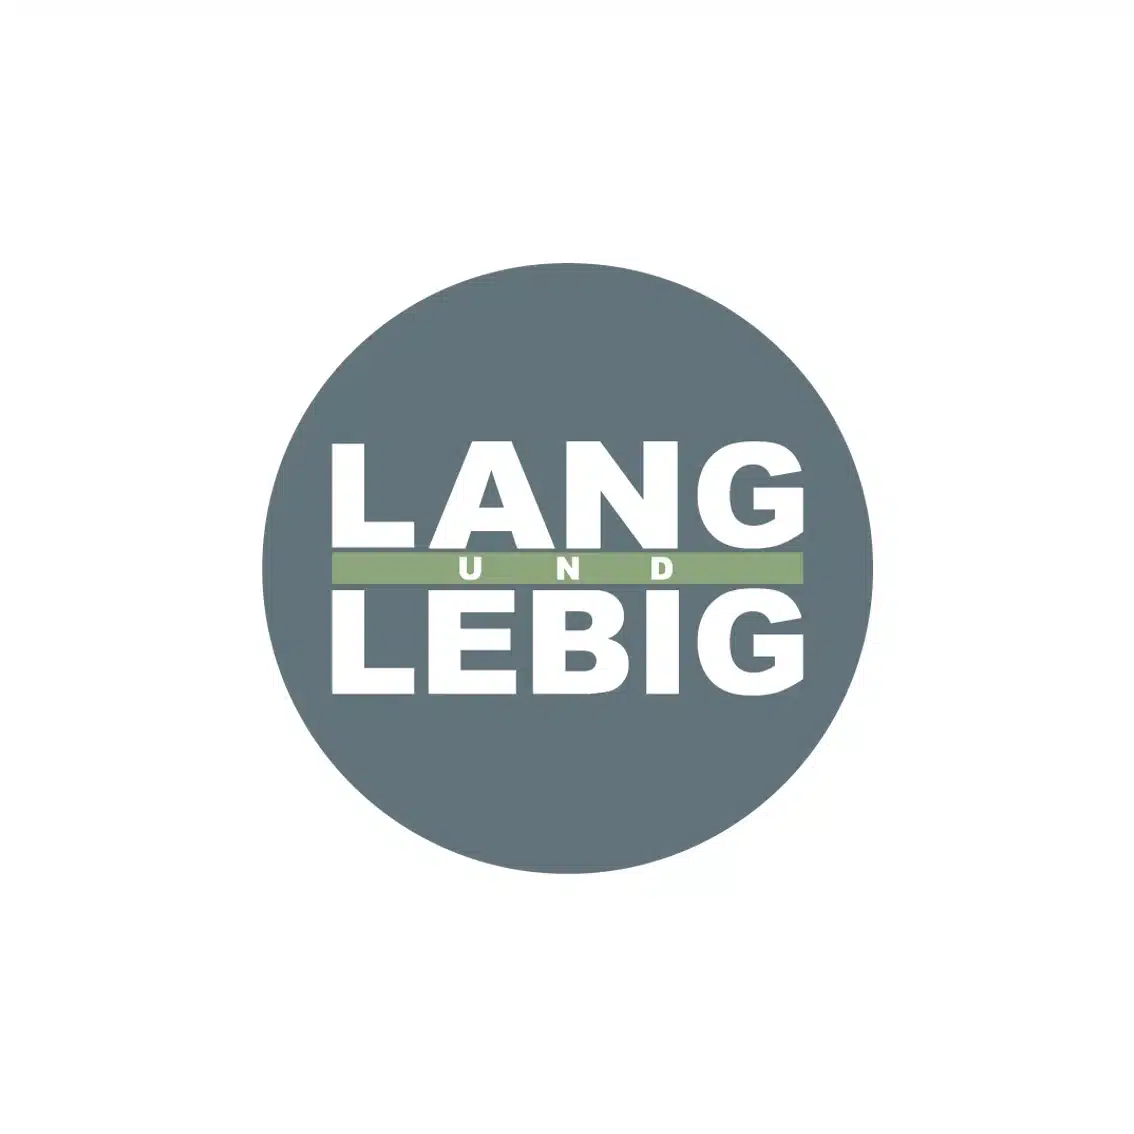 LangundLebig Shop Logo